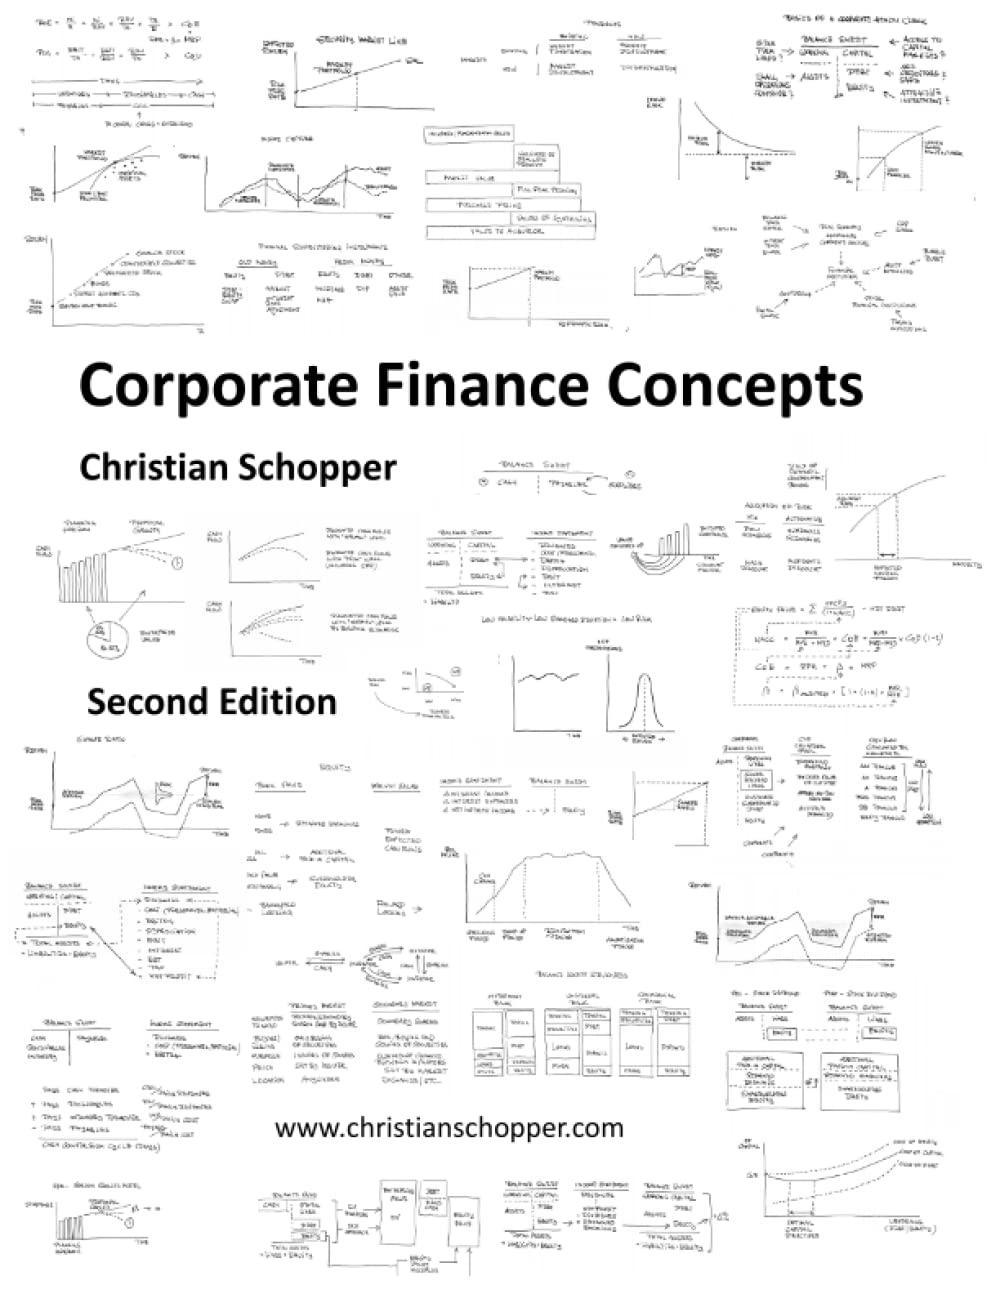 corporate finance concepts 2nd edition christian schopper b0bcwpkljg, 979-8849542133